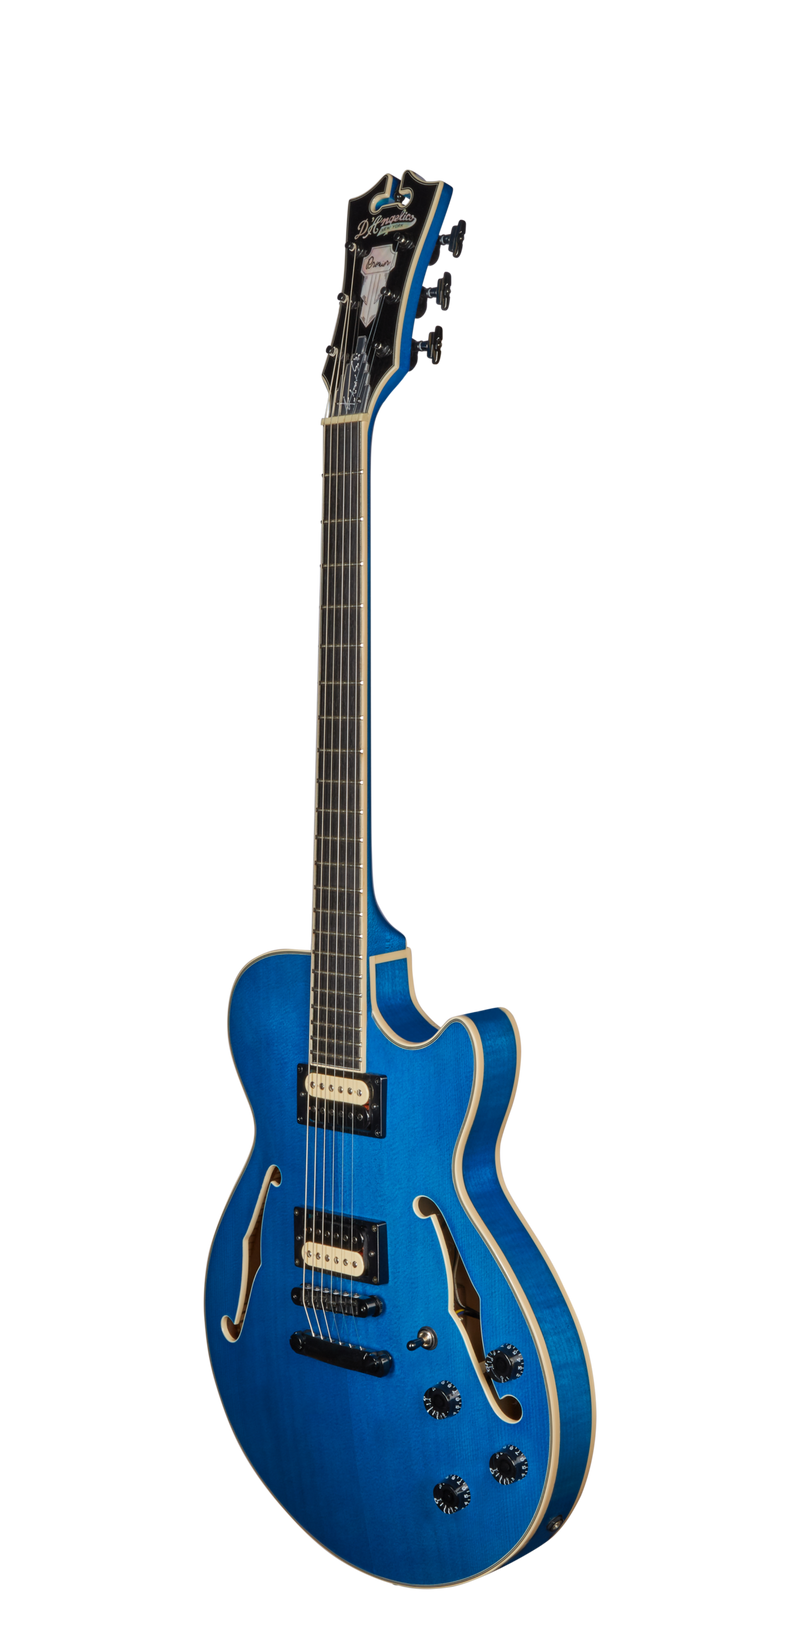 D'Angelico FABRIZIO SOTTI Signature Hollow Body Electric Guitar (Blue)